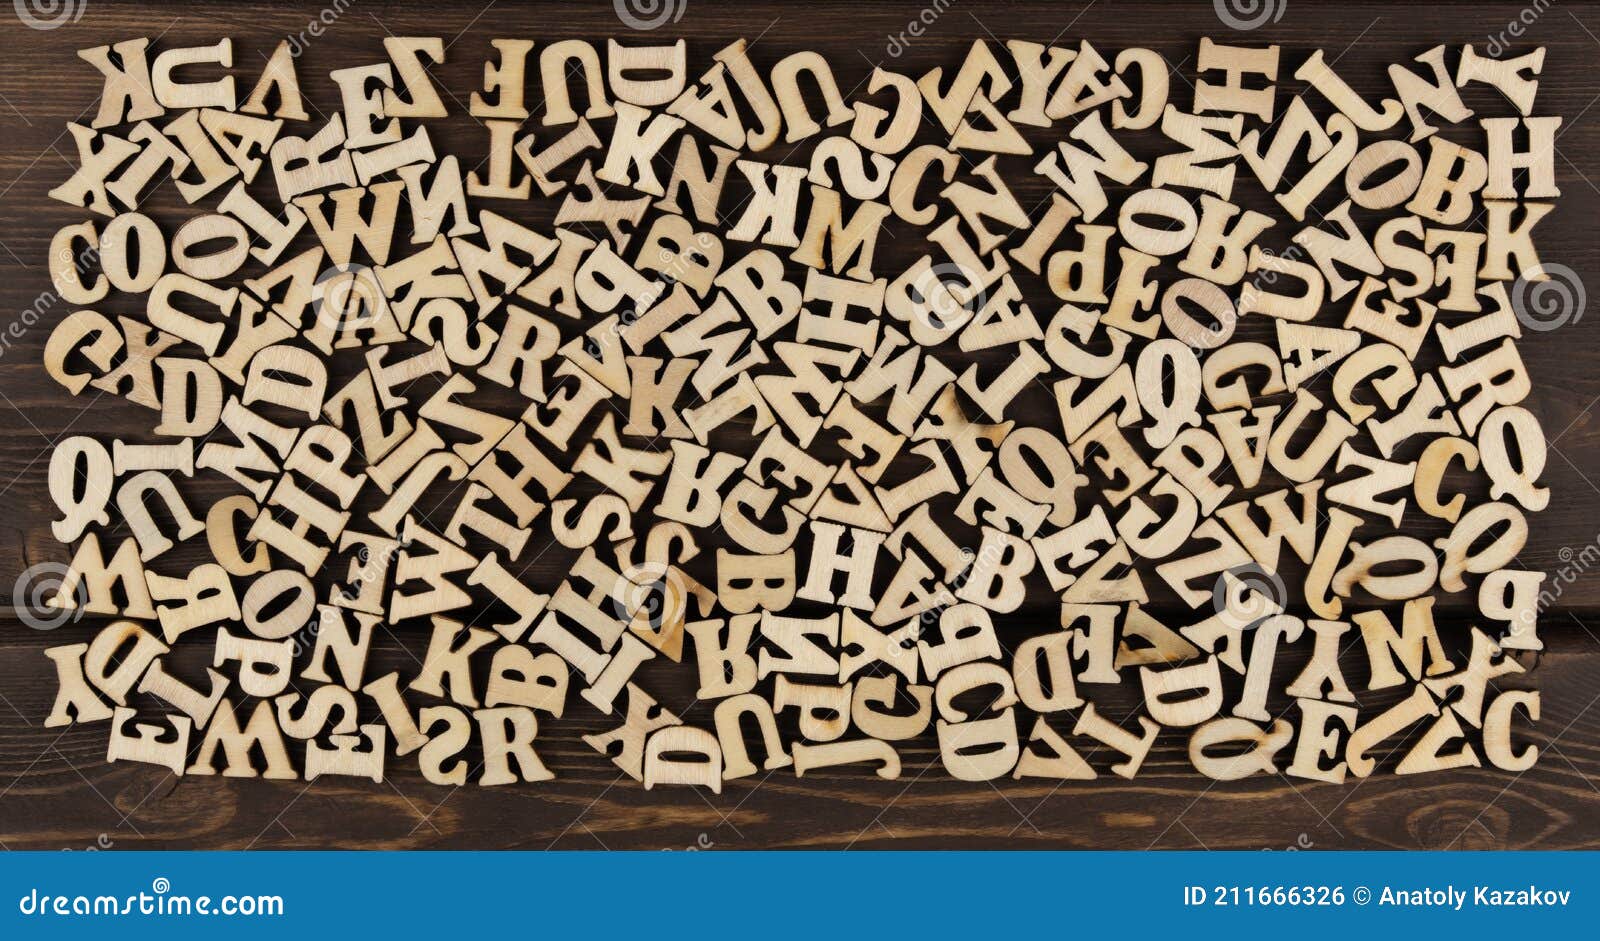 muitas letras de madeira do alfabeto inglês entre o garfo e a faca 18962974  Foto de stock no Vecteezy